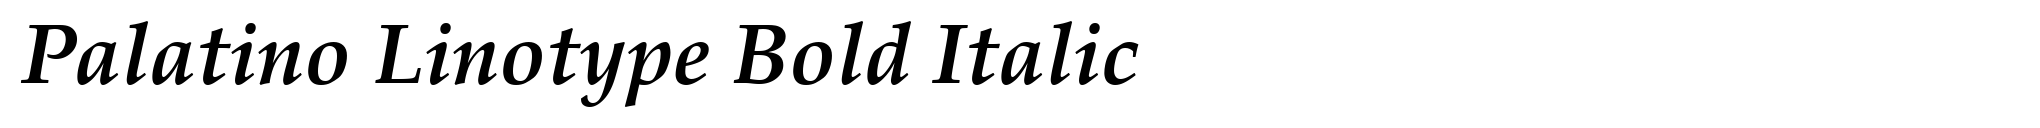 Palatino Linotype Bold Italic image